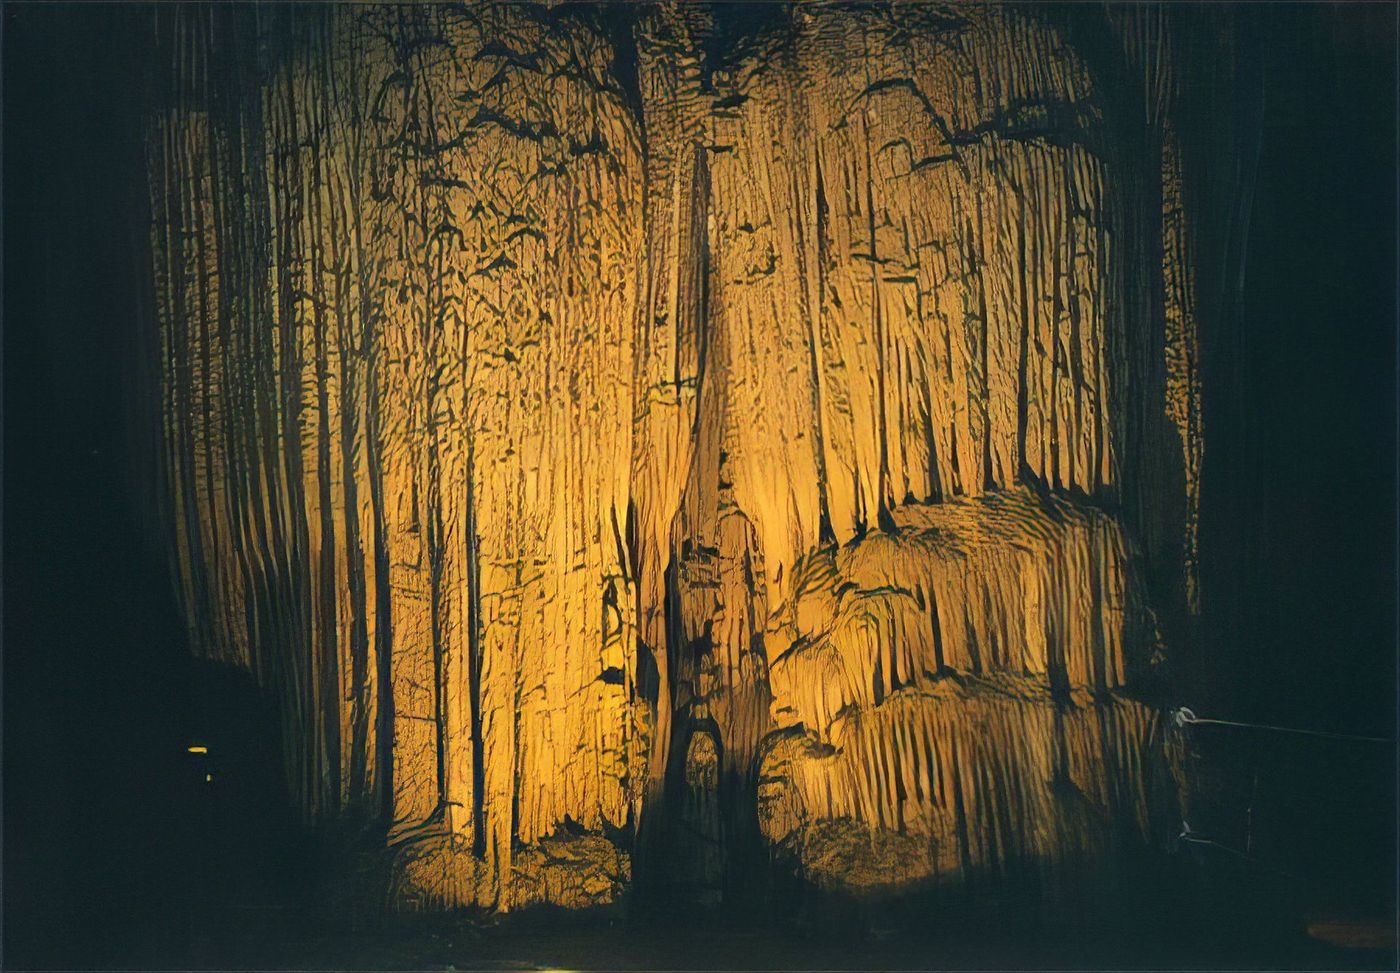 Grottes de Škocjan